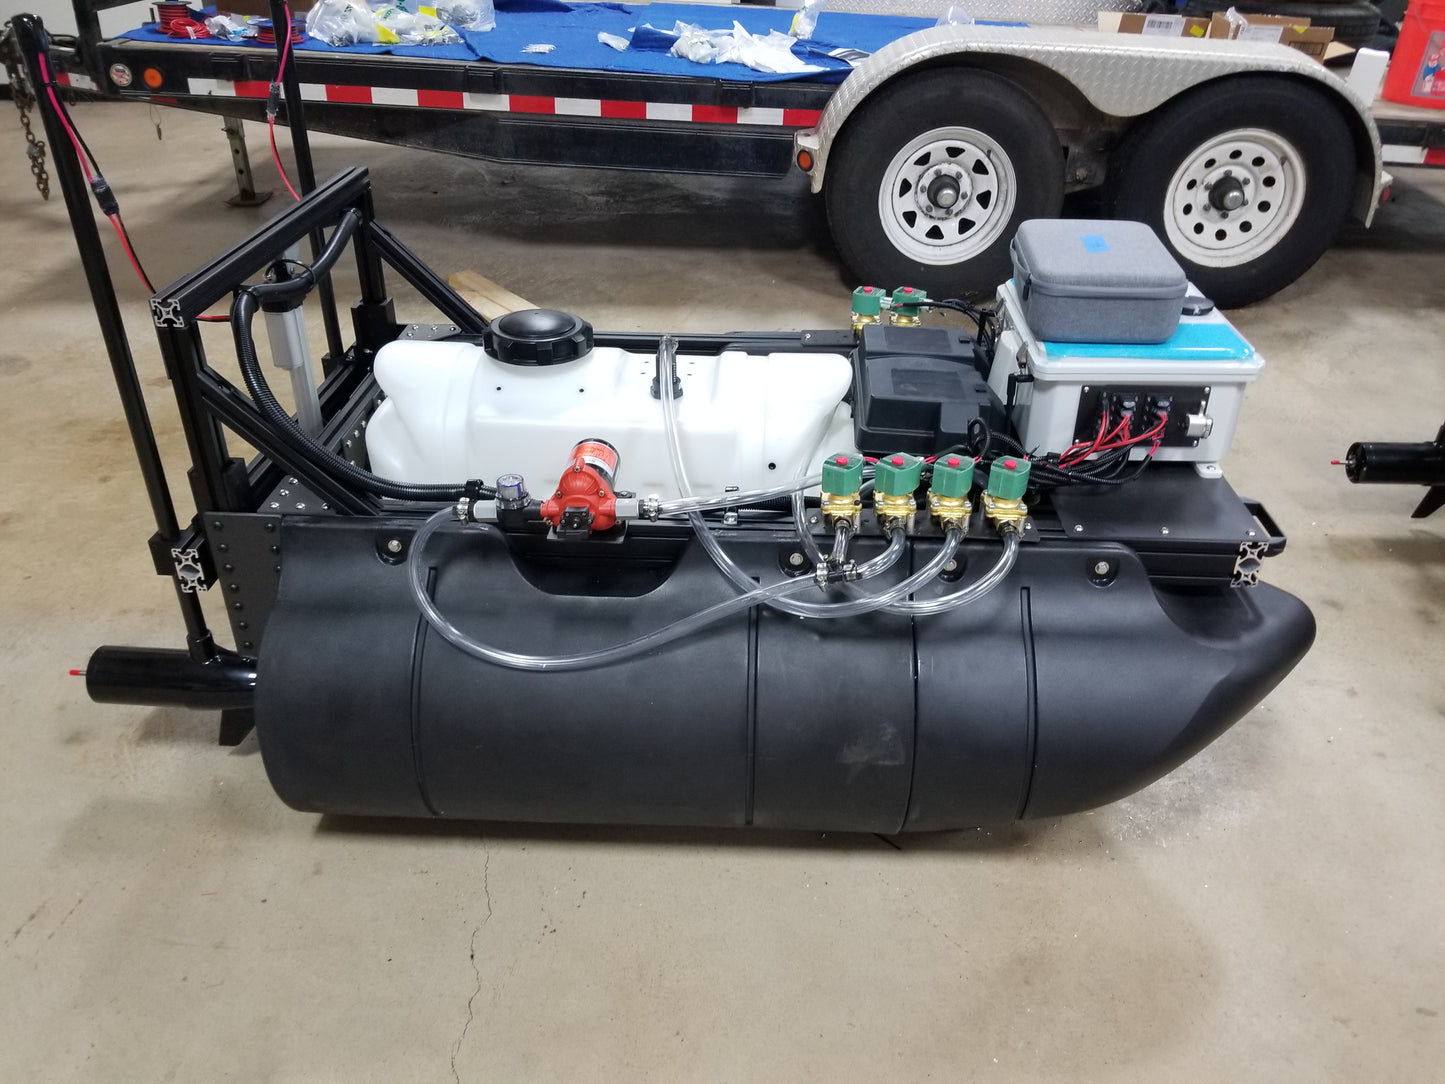 ADAPT Drone Boat - Autonomous Spraying Boat, Standard Length, Electric